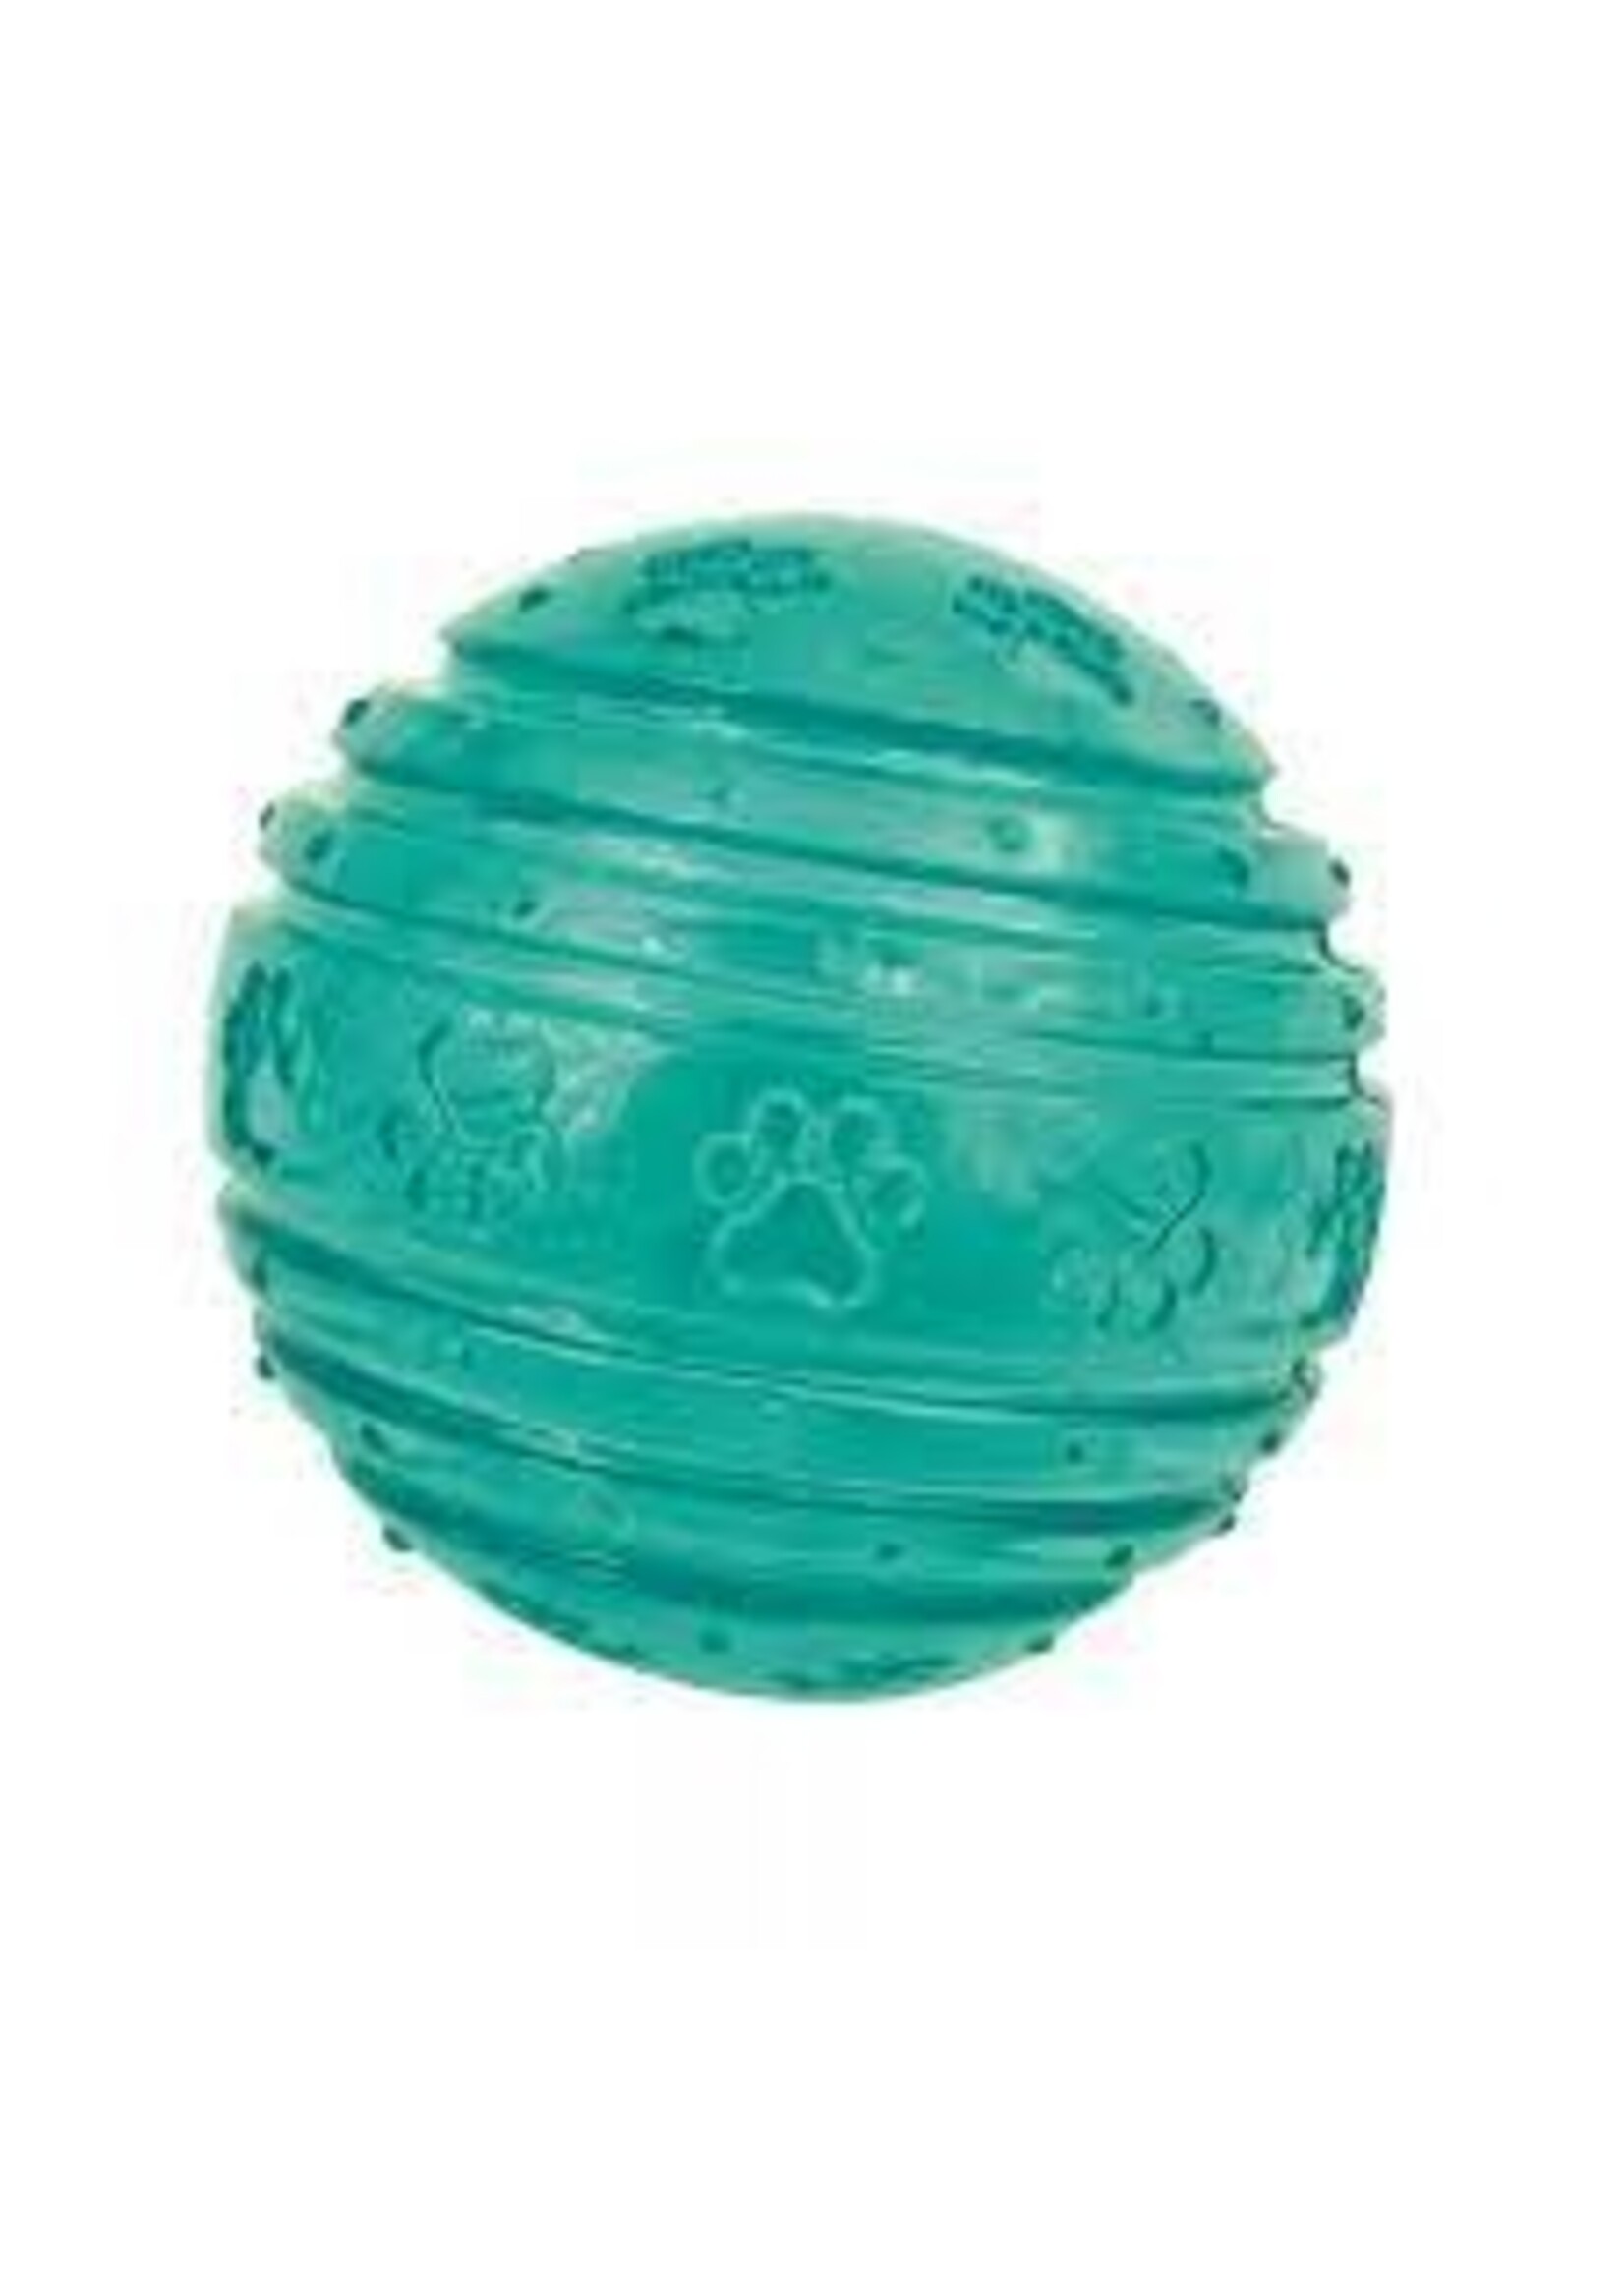 Coastal Pet Products Inc. Li'l Pals Antimicrobial Toy 3" Ball Teal